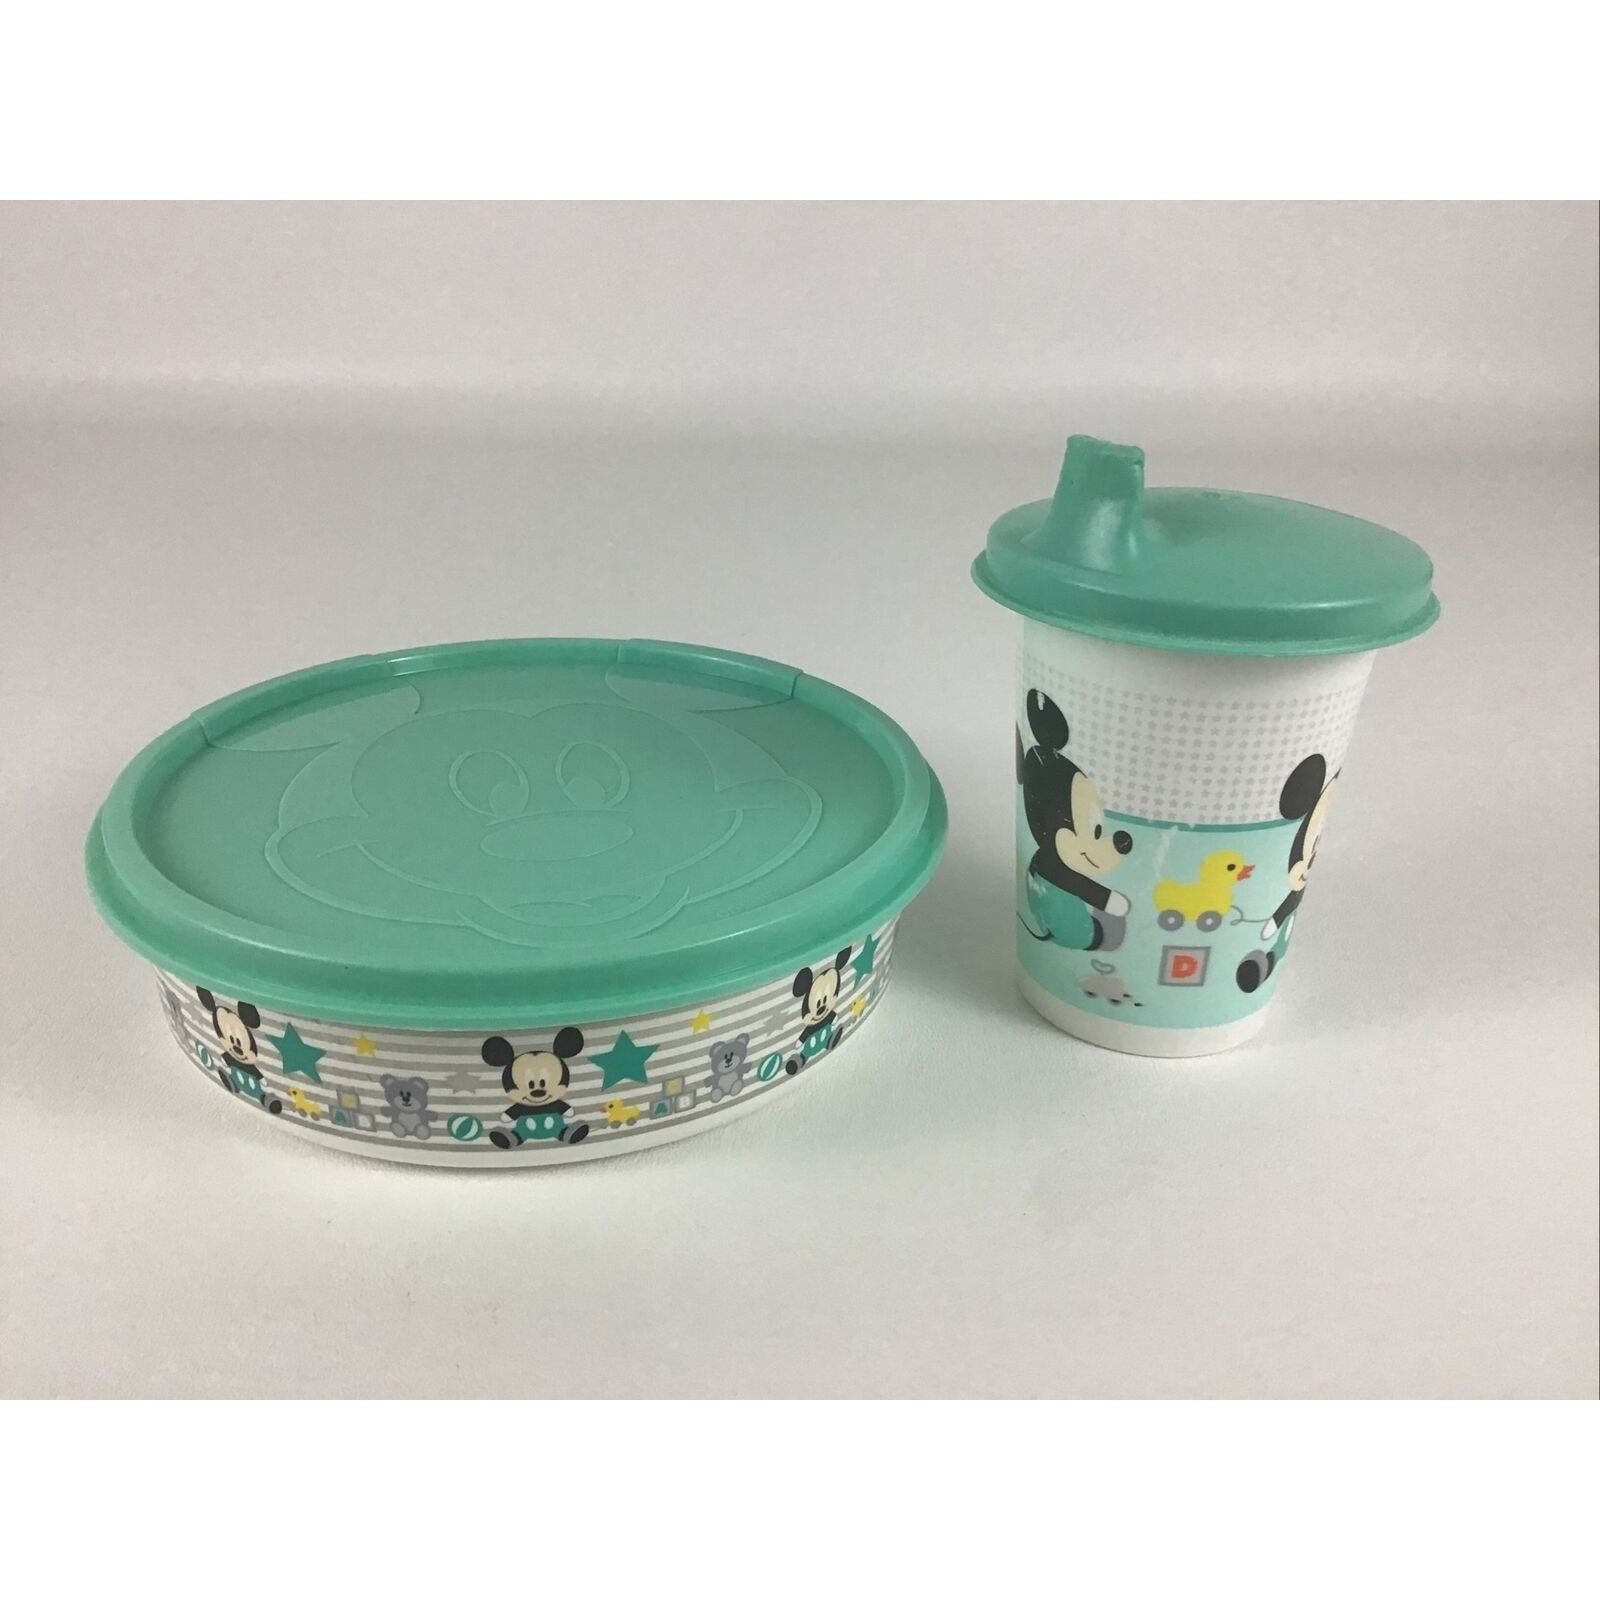 Vintage Tupperware Child Feeding Bowl, Tupperware 3847, Baby Feeding Bowl -   Norway